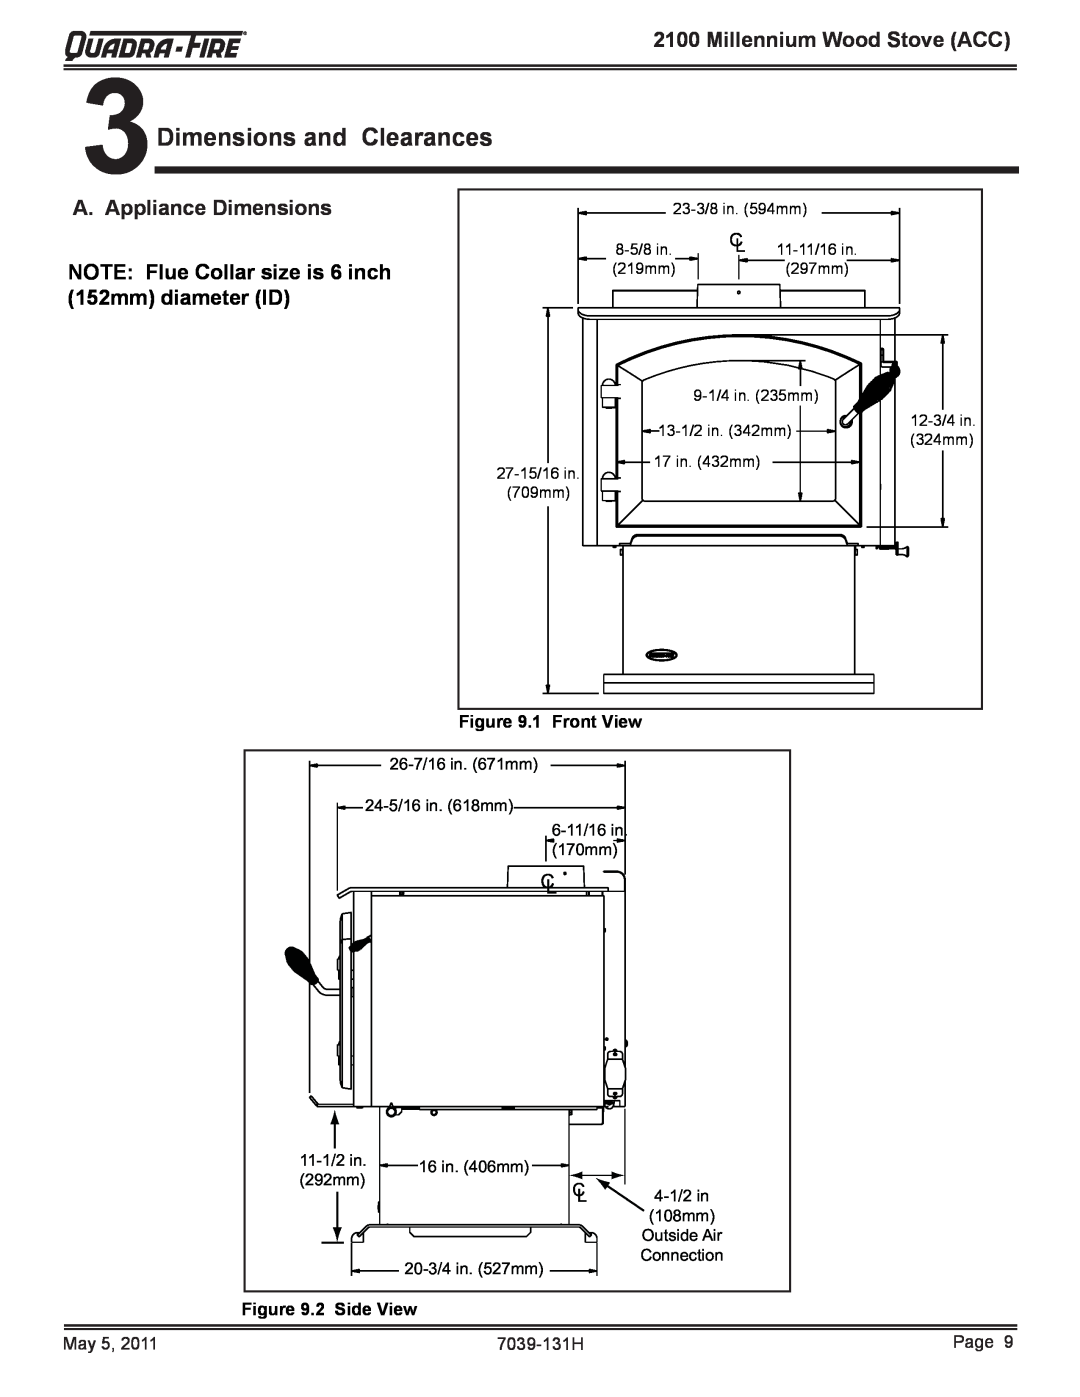 Quadra-Fire 21M-ACC Dimensions and Clearances, Millennium Wood Stove ACC, A. Appliance Dimensions, 1 Front View 